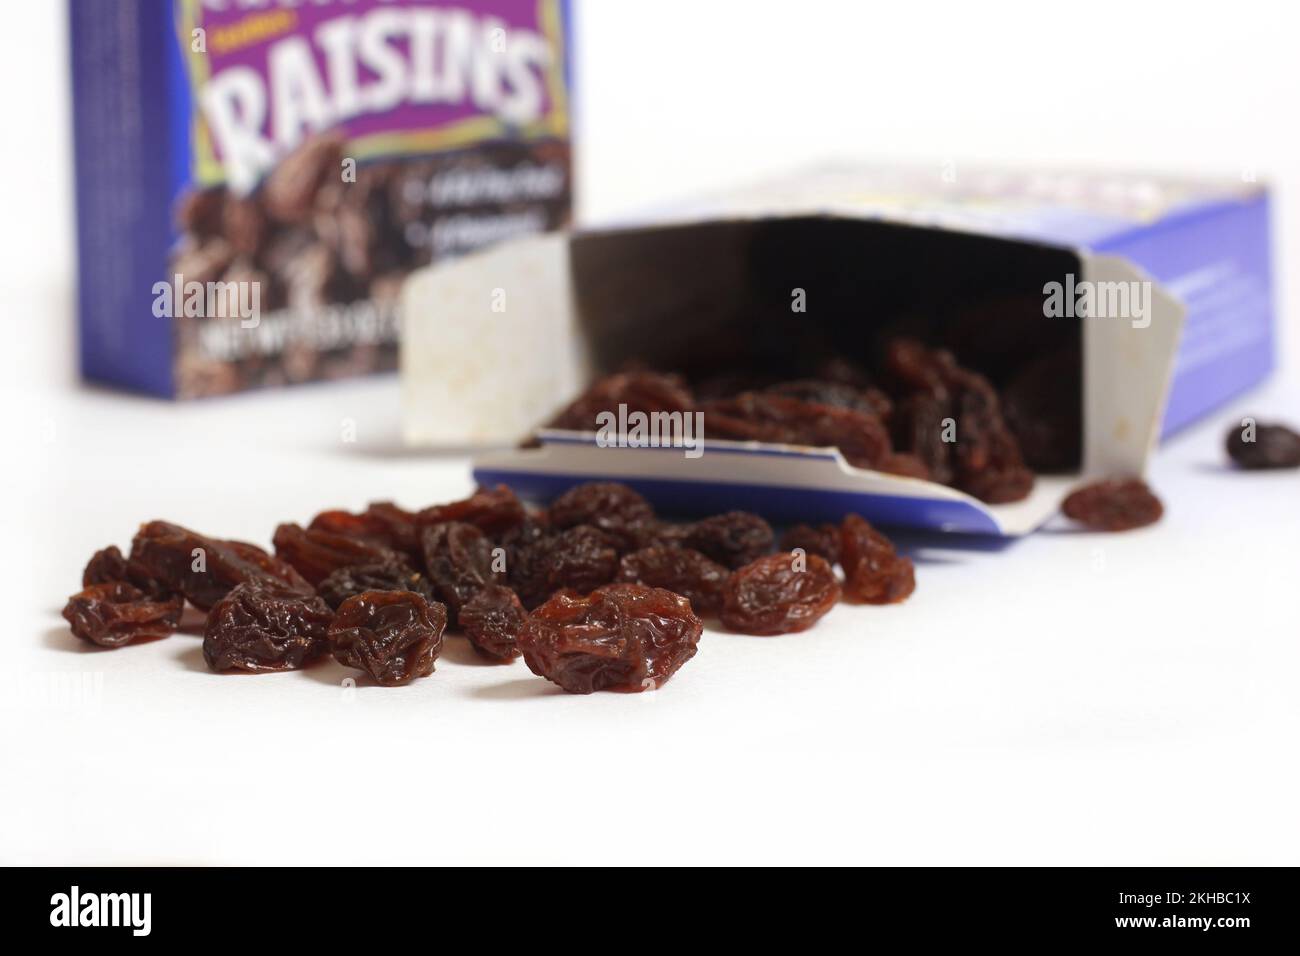 Pile of Raisins With Box Isolated on White Stock Photo